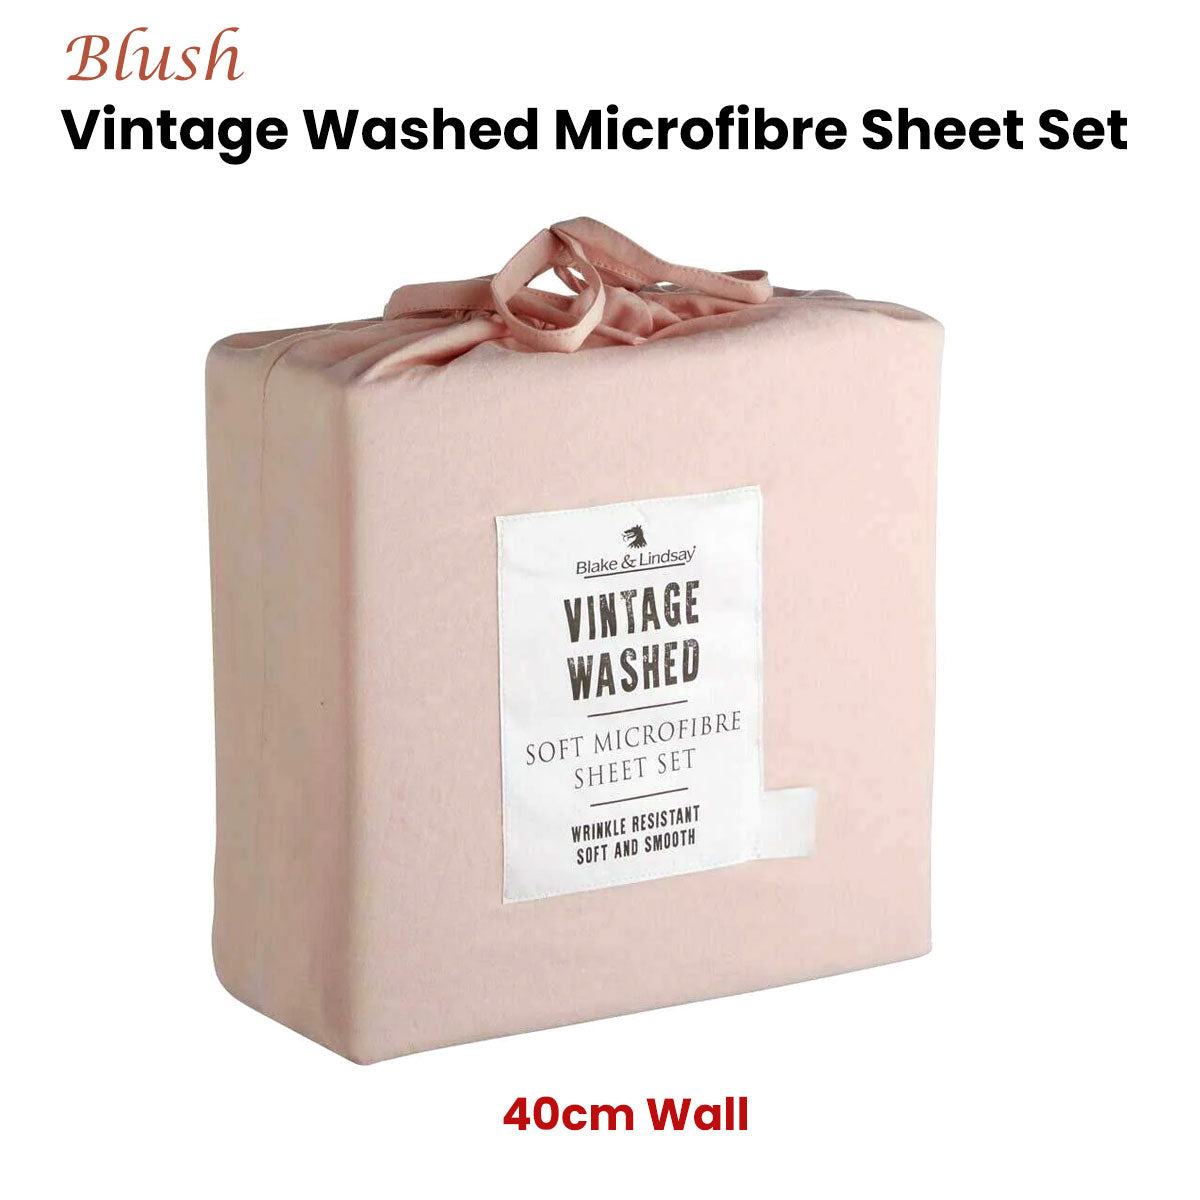 Blake & Lindsay Blush Vintage Washed Microfibre Sheet Set 40cm Wall Single